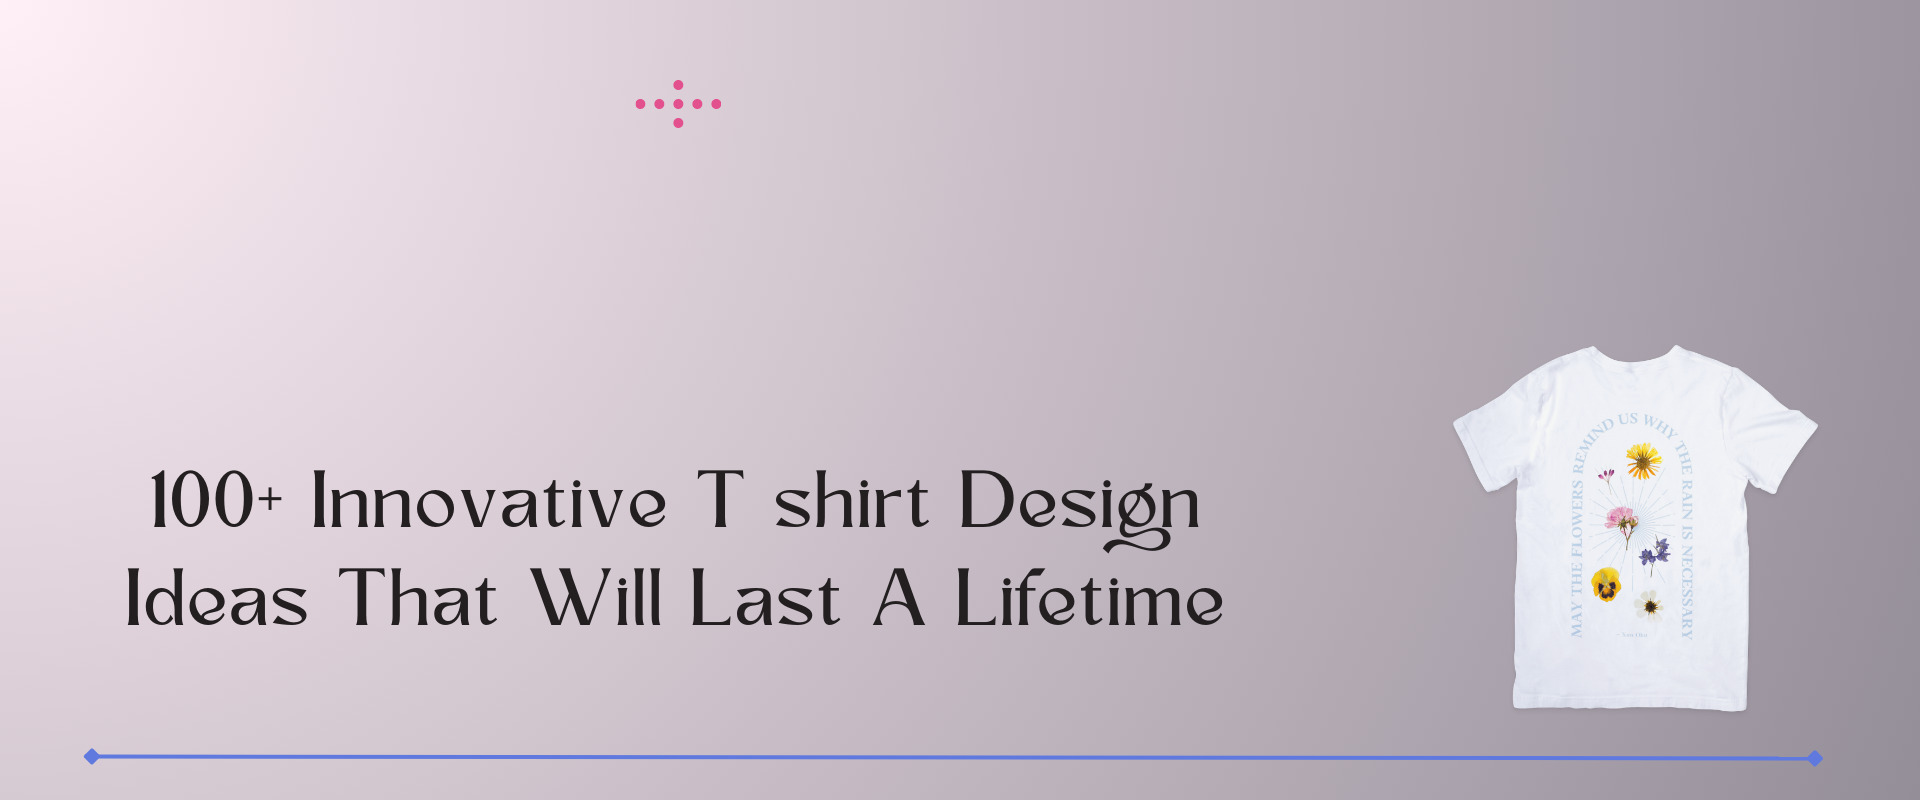 100+ Innovative T shirt Design Ideas That Will Last A Lifetime